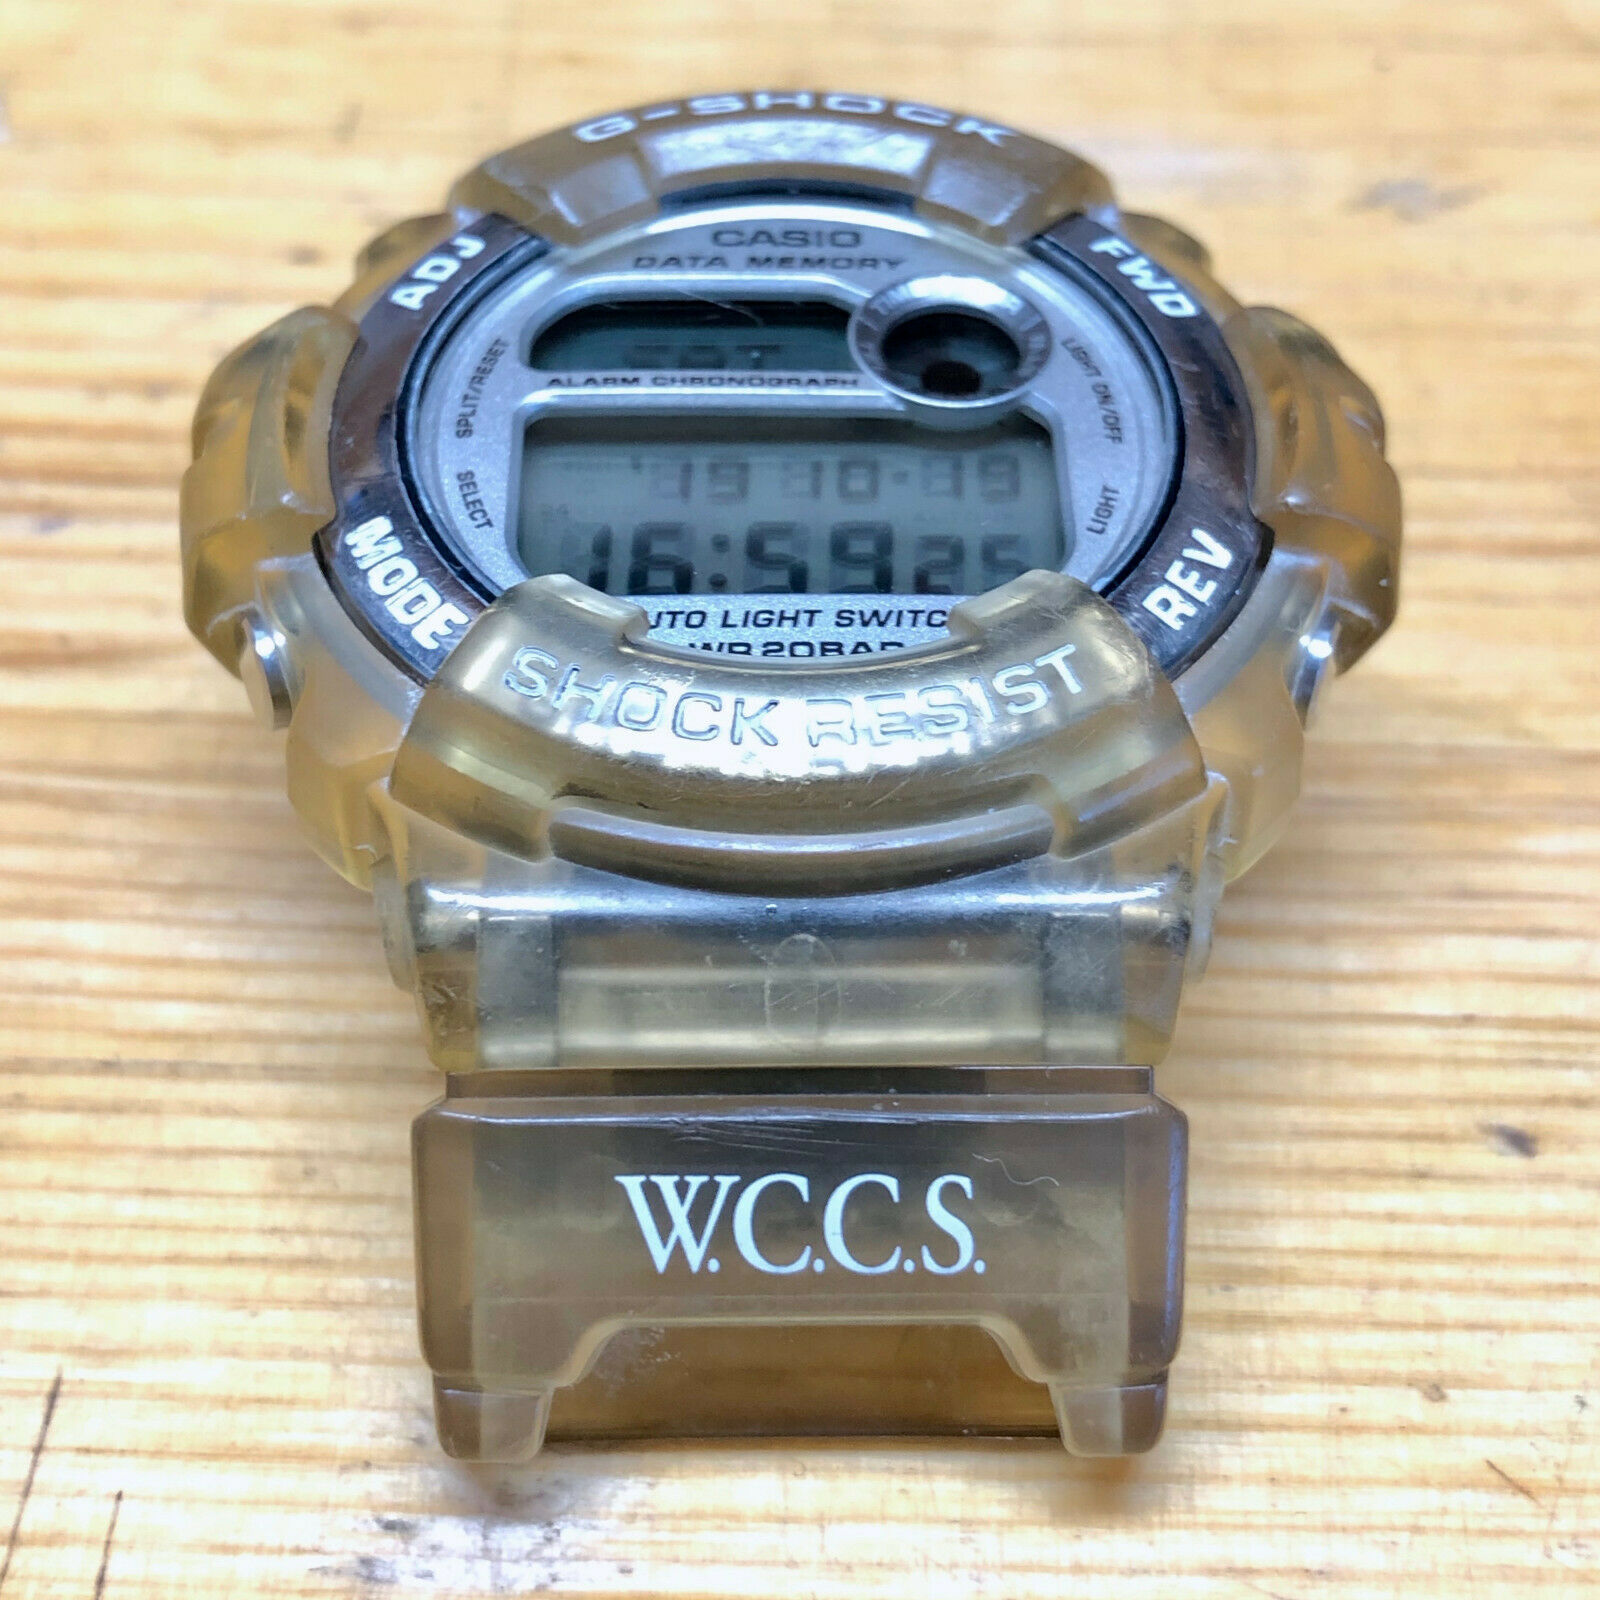 Rare Casio G-Shock DW-9600 WC Titanium, Limited Edition WCCS Made 